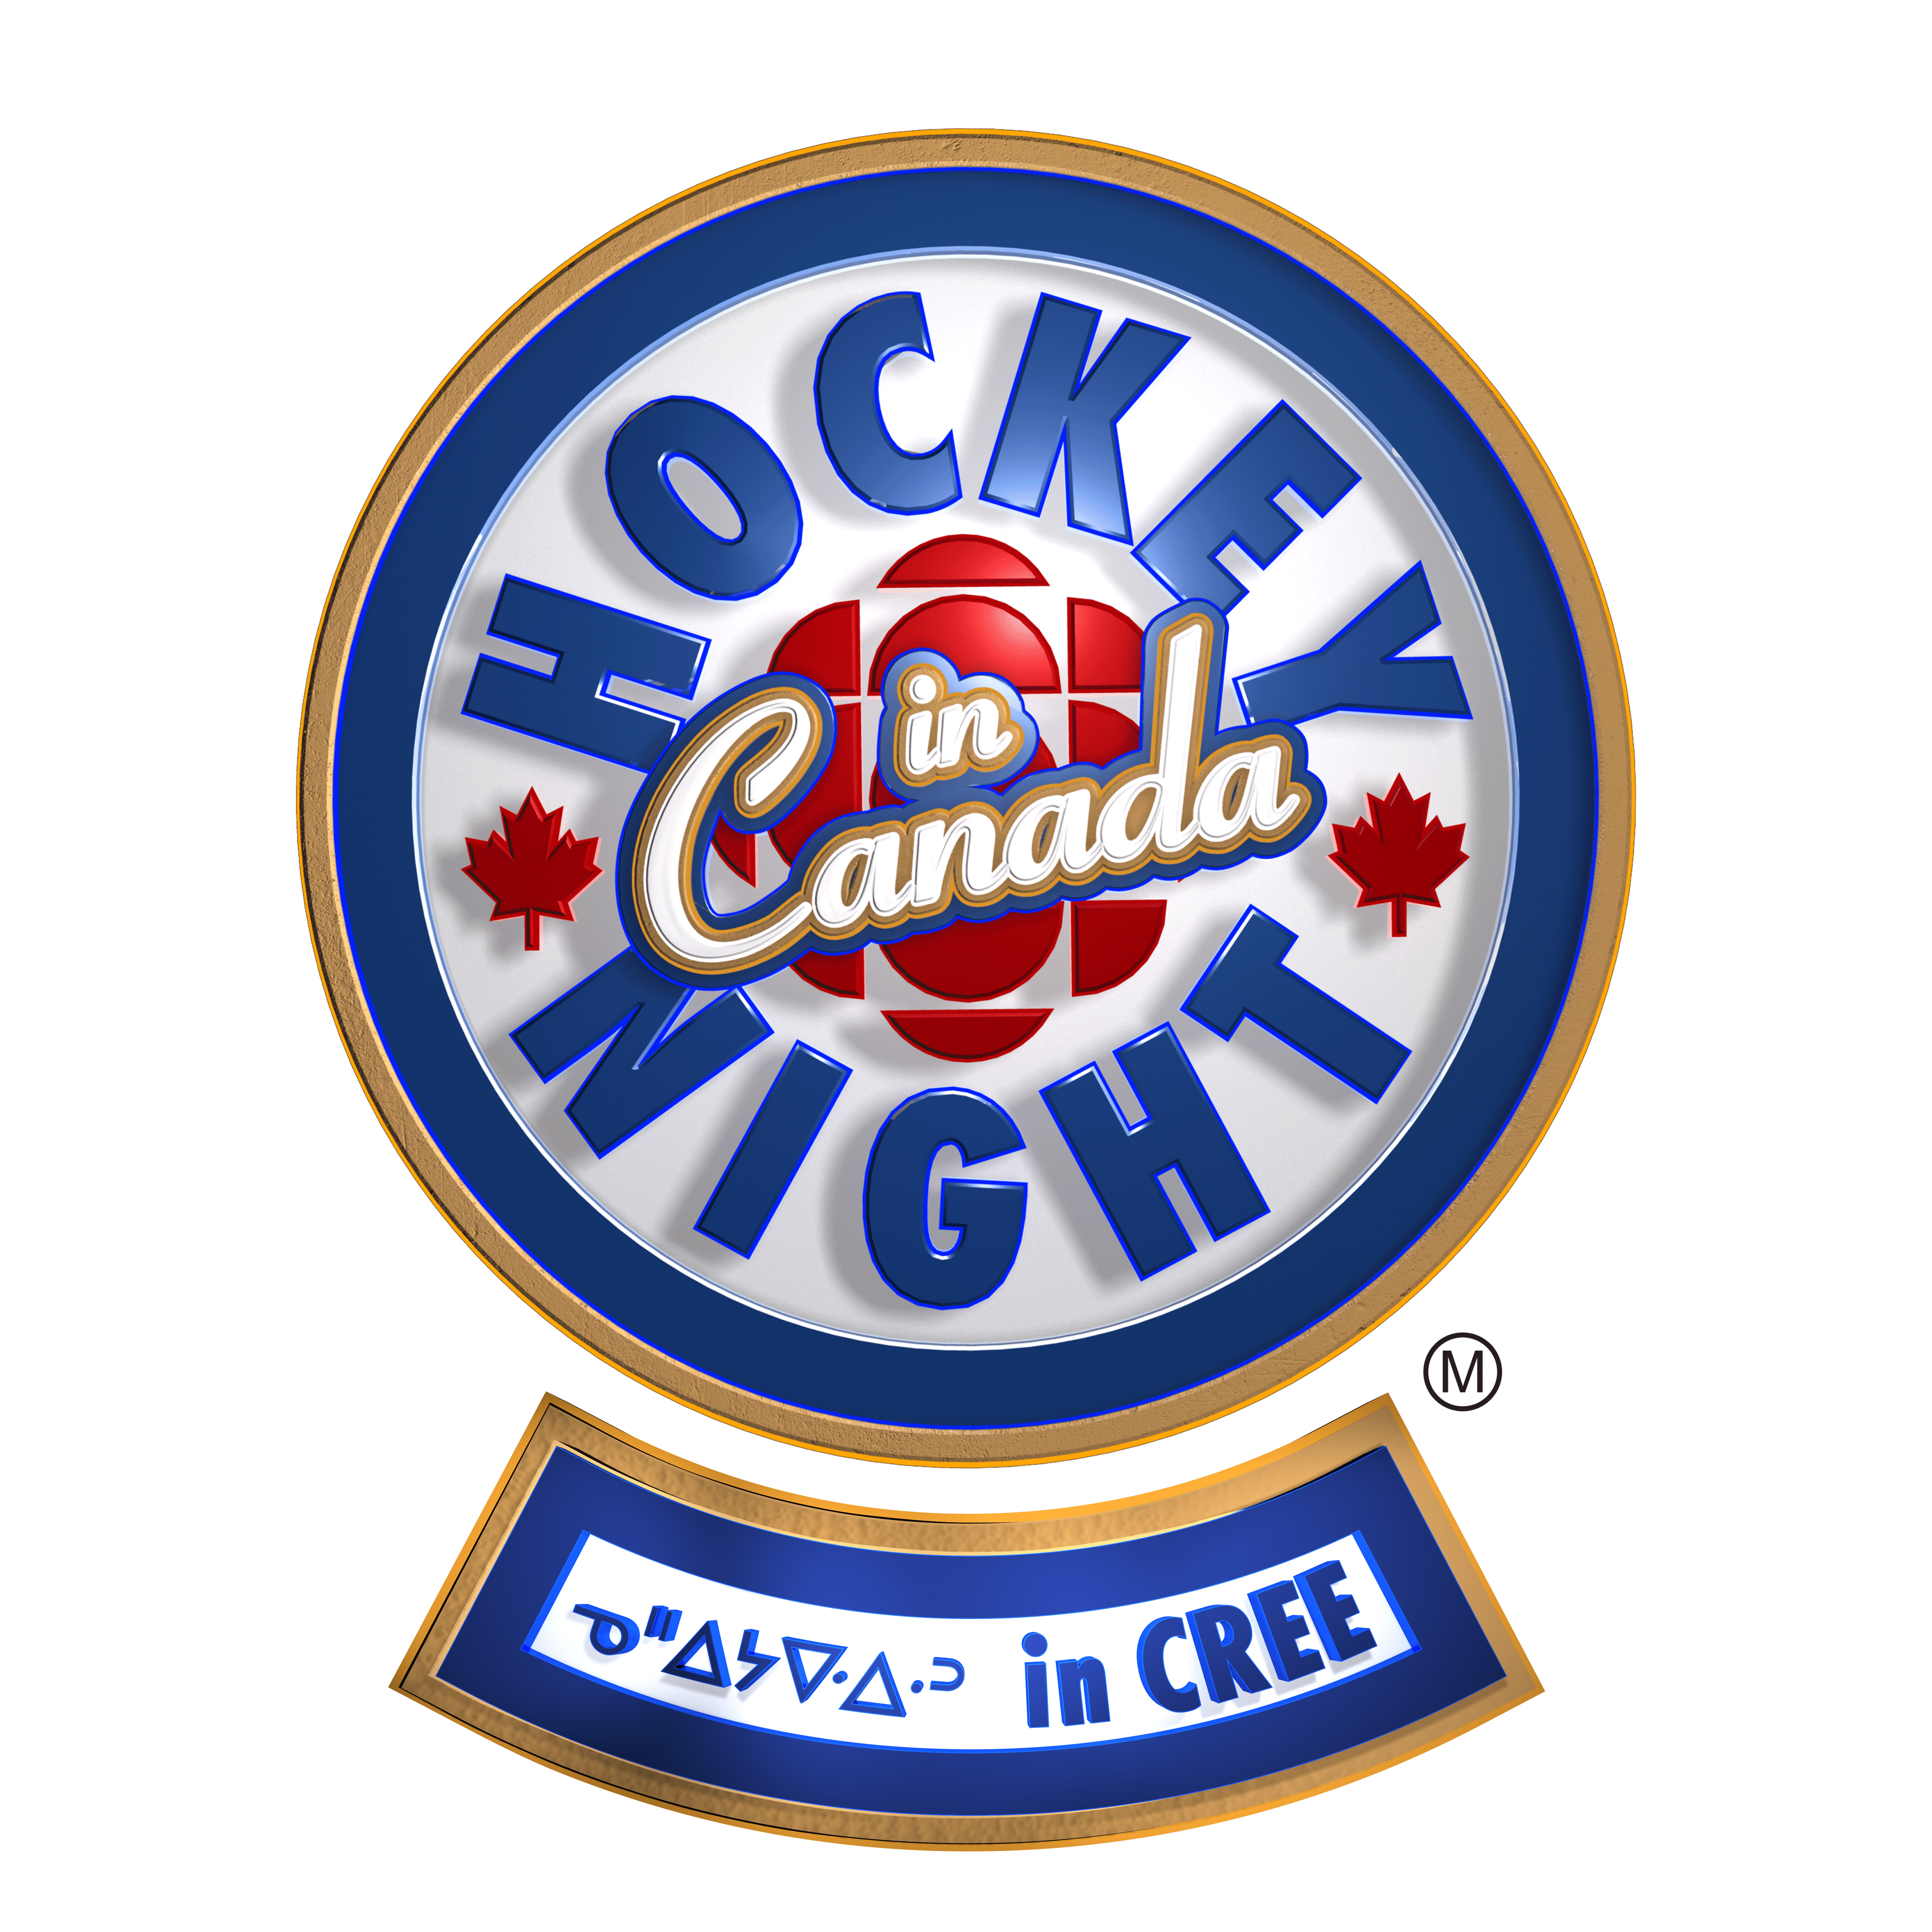 Hockey Night in Canada in Cree